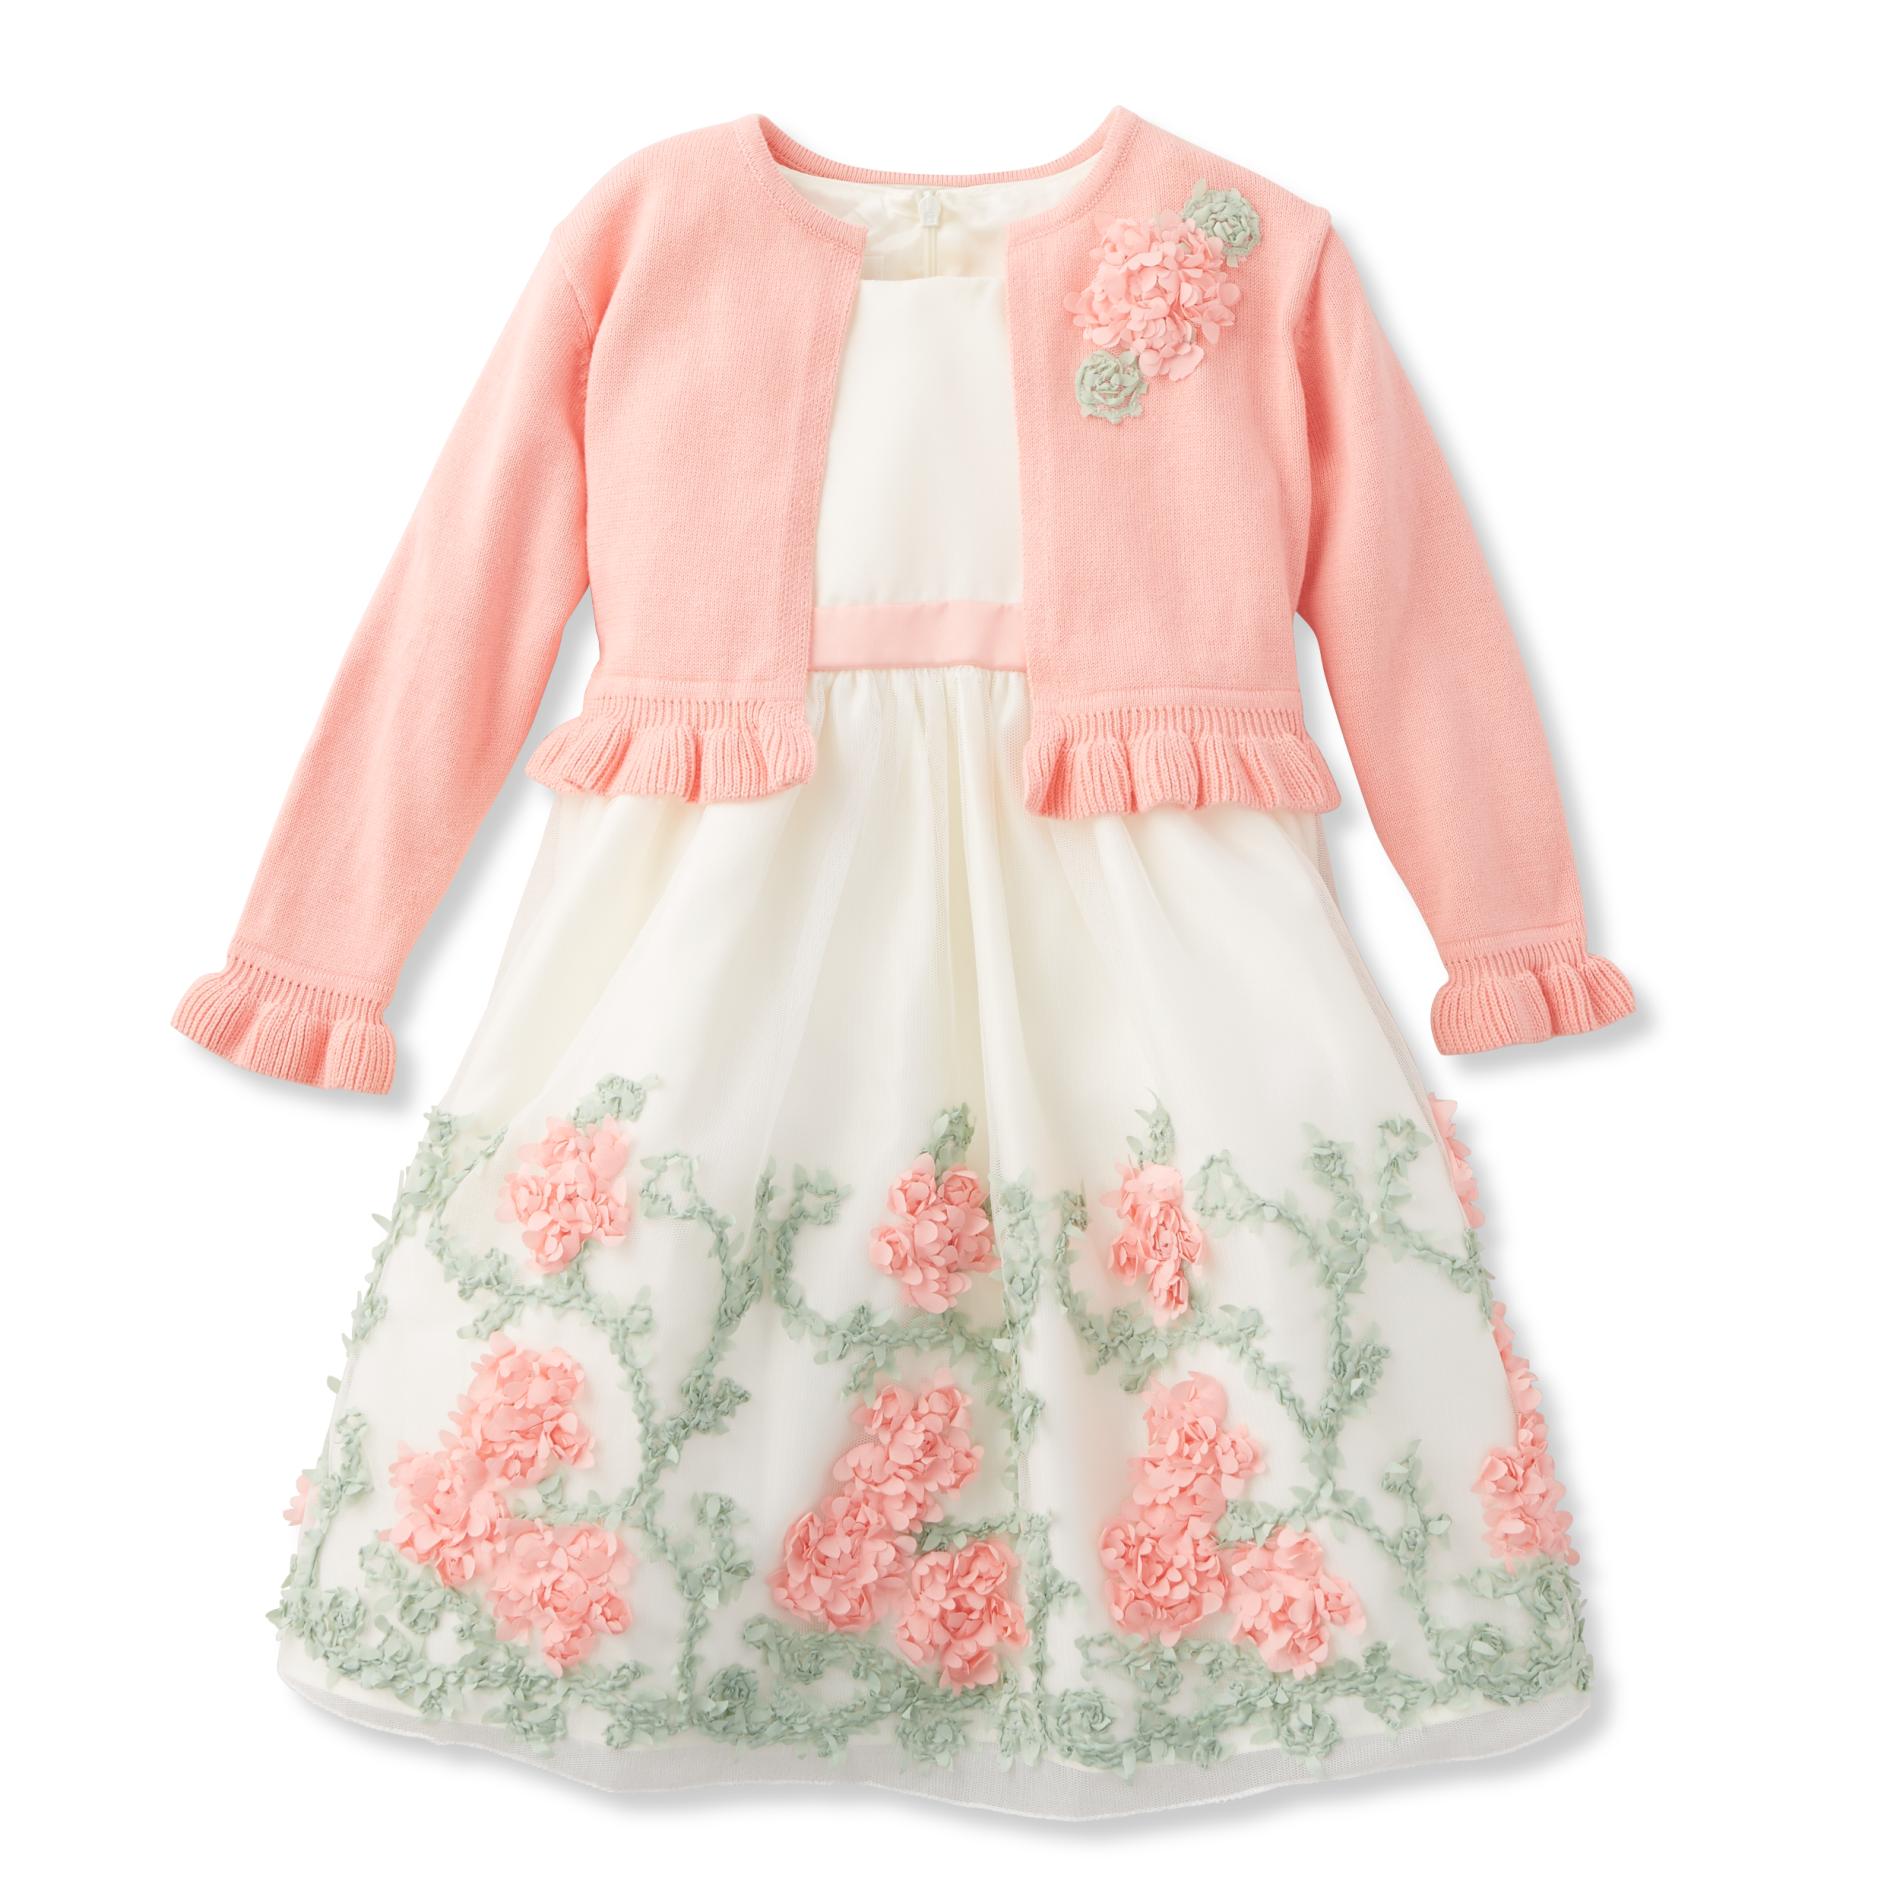 American Princess Infant Girls' Occasion Dress & Shrug